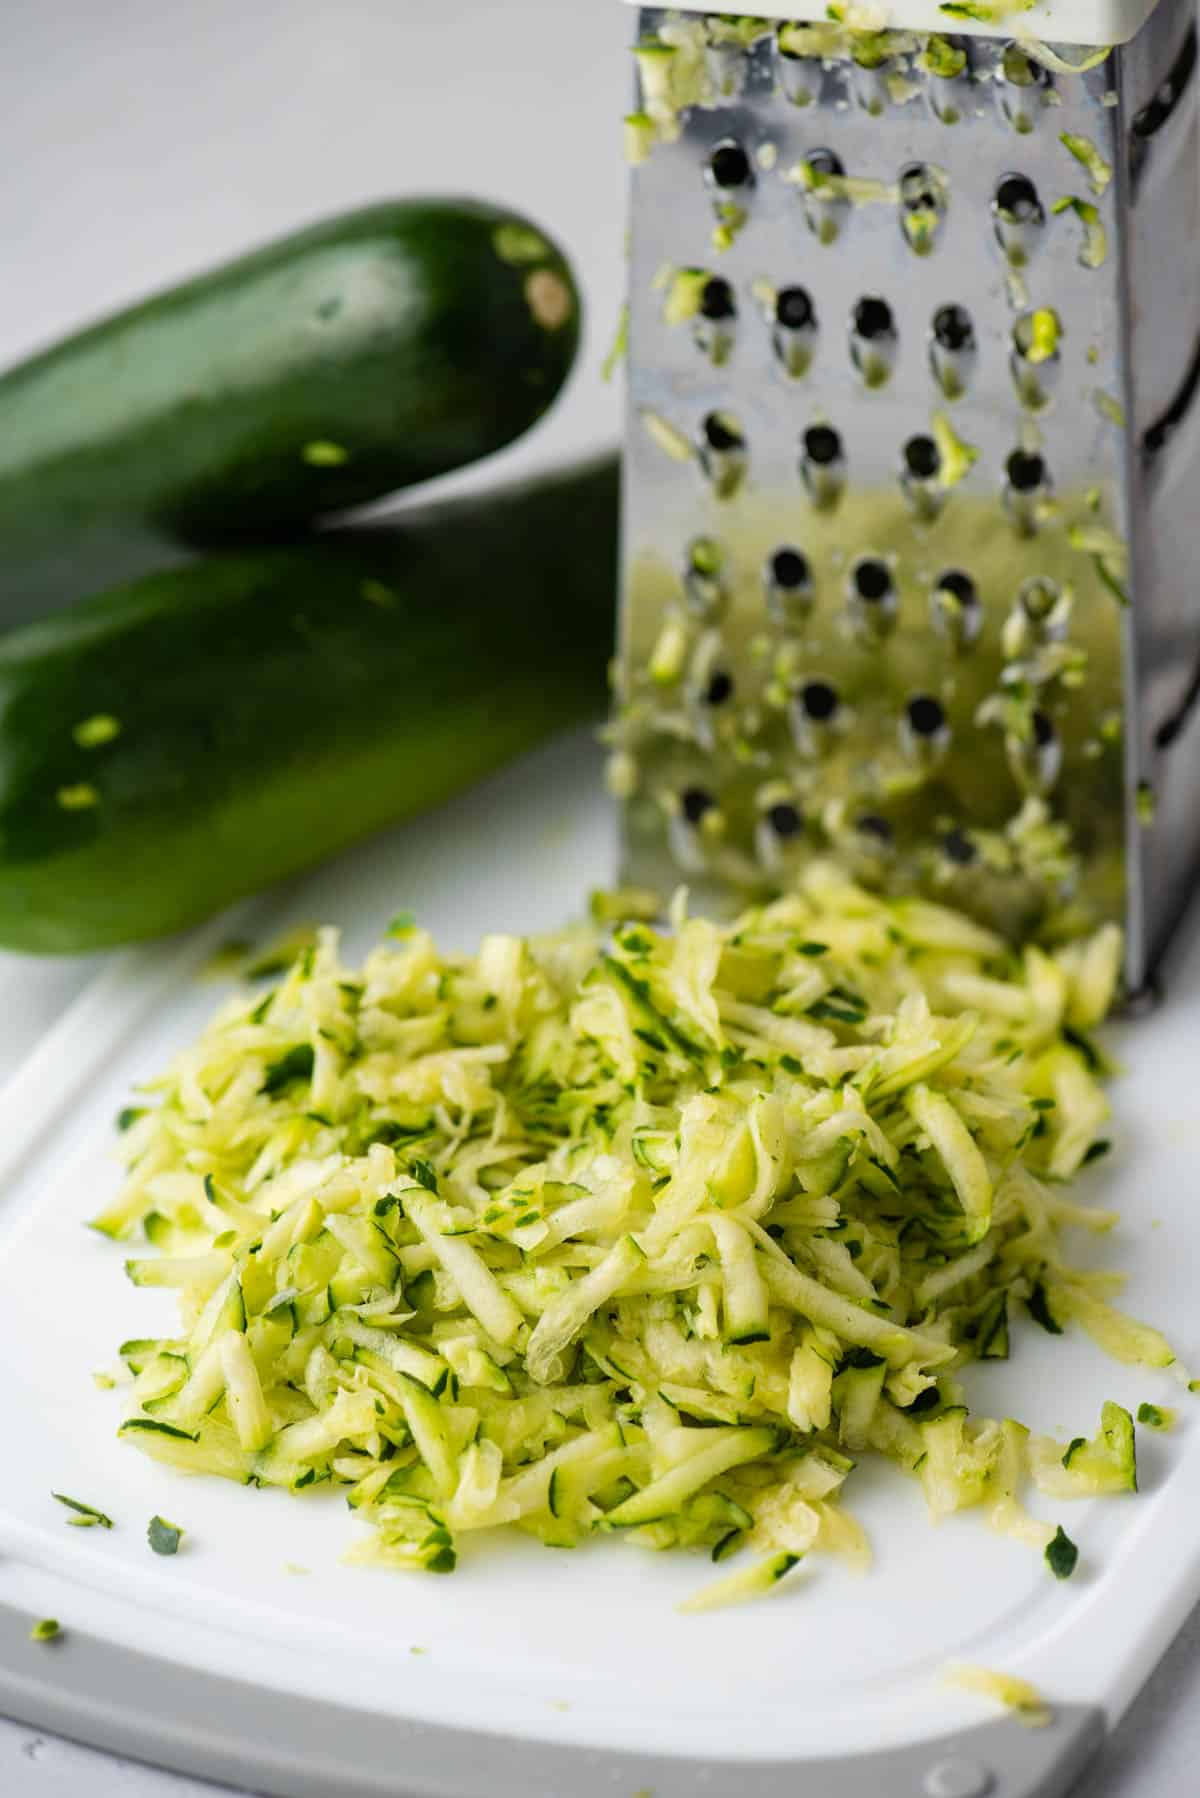 Grated zucchini on a cutting board